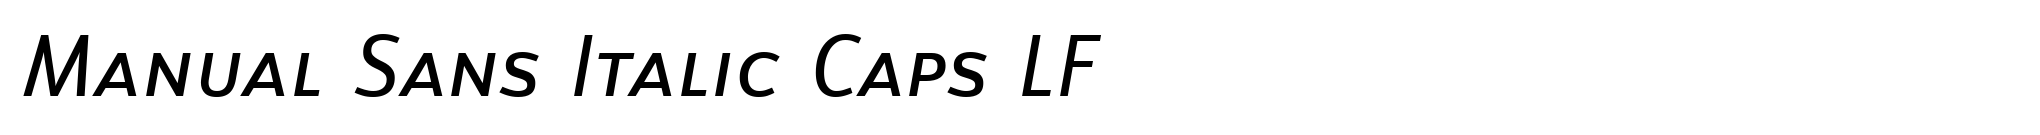 Manual Sans Italic Caps LF image